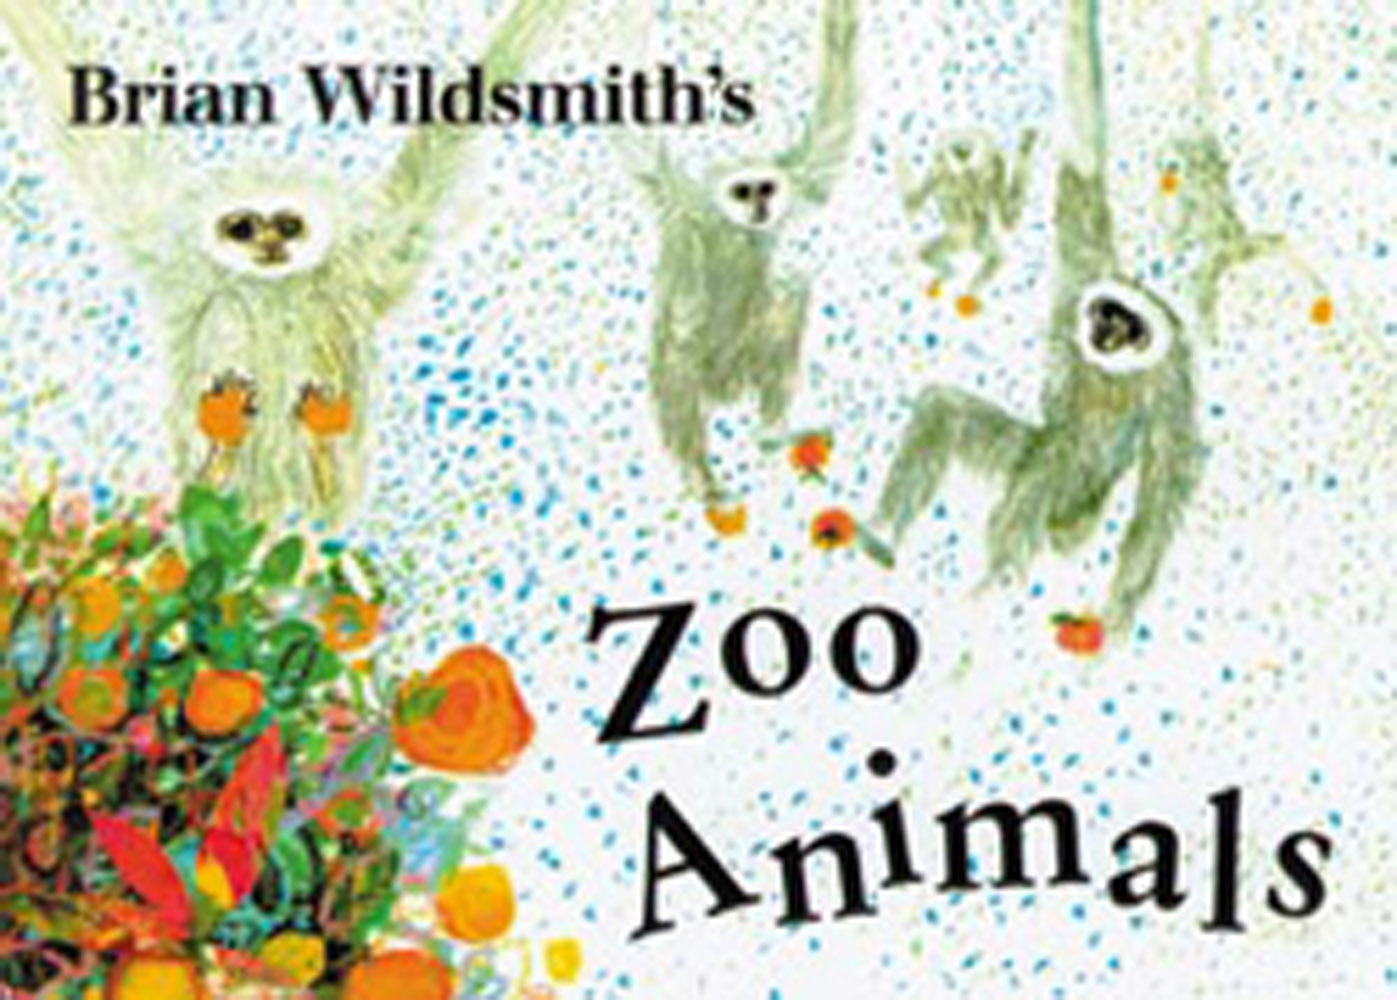 Brian Wildsmith’s Zoo Animals